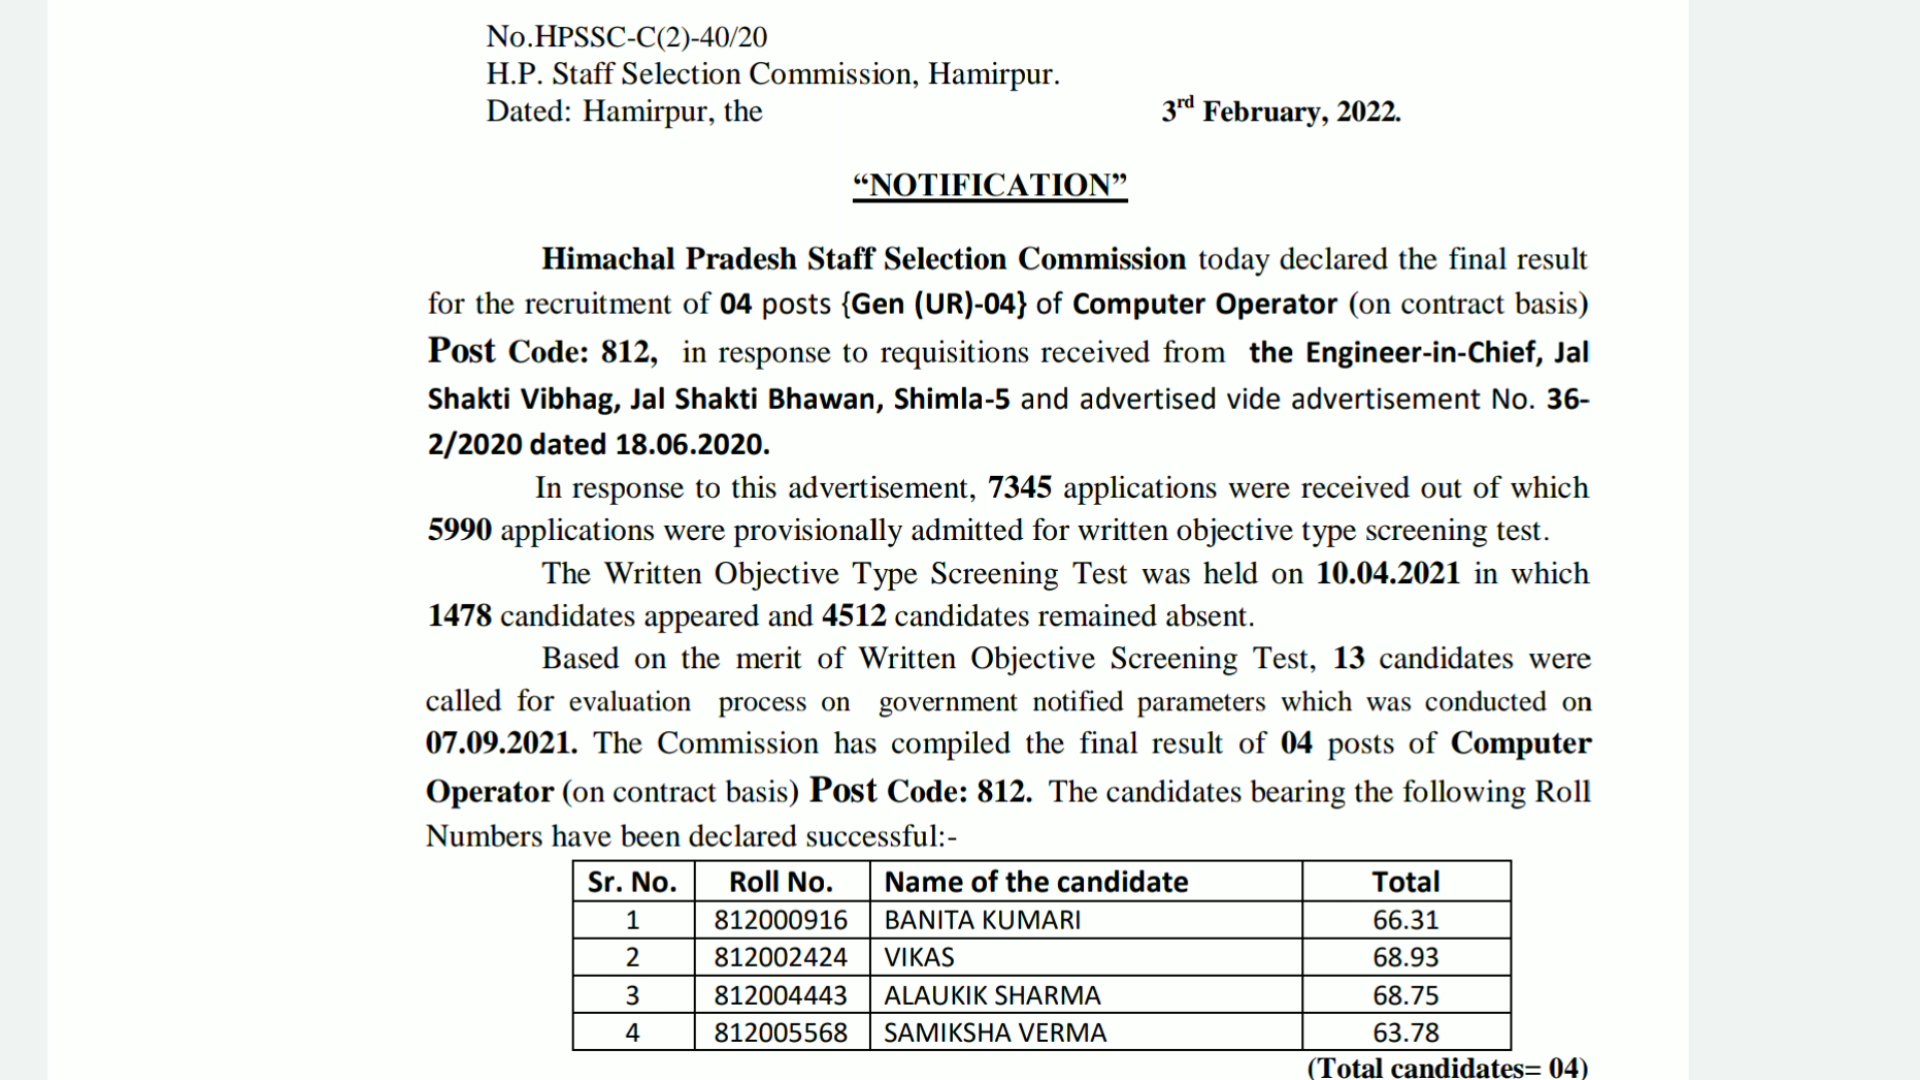 HPSSC Hamirpur Computer Operator 812 Post Code Final Result Cutoff Waiting